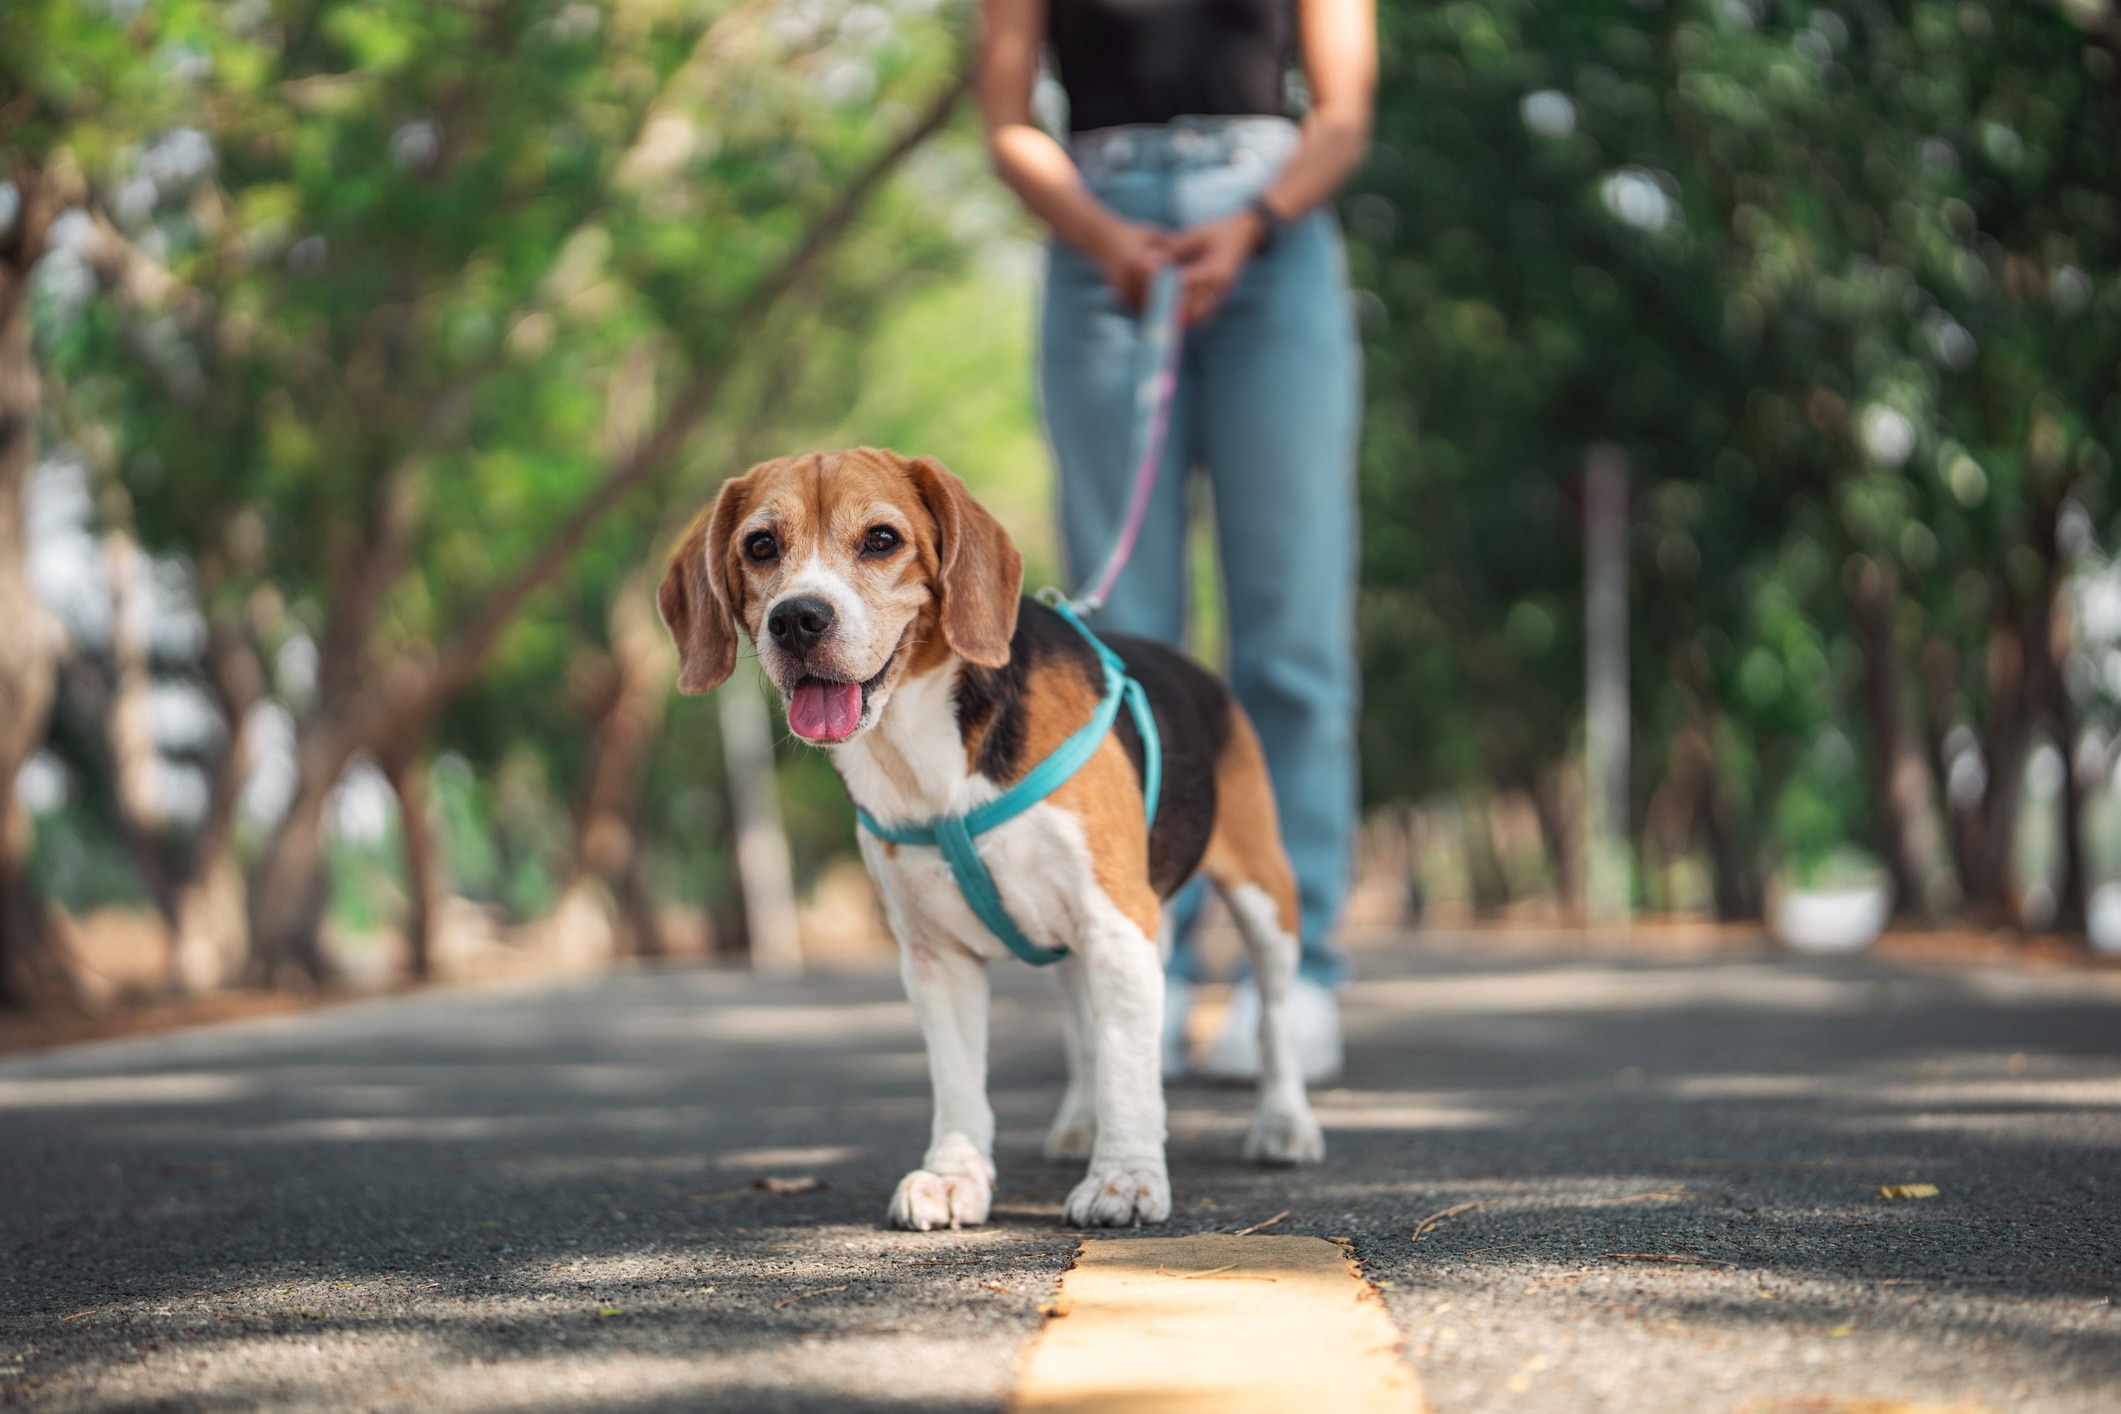 beagle walking on pavement wearing a harness and leash